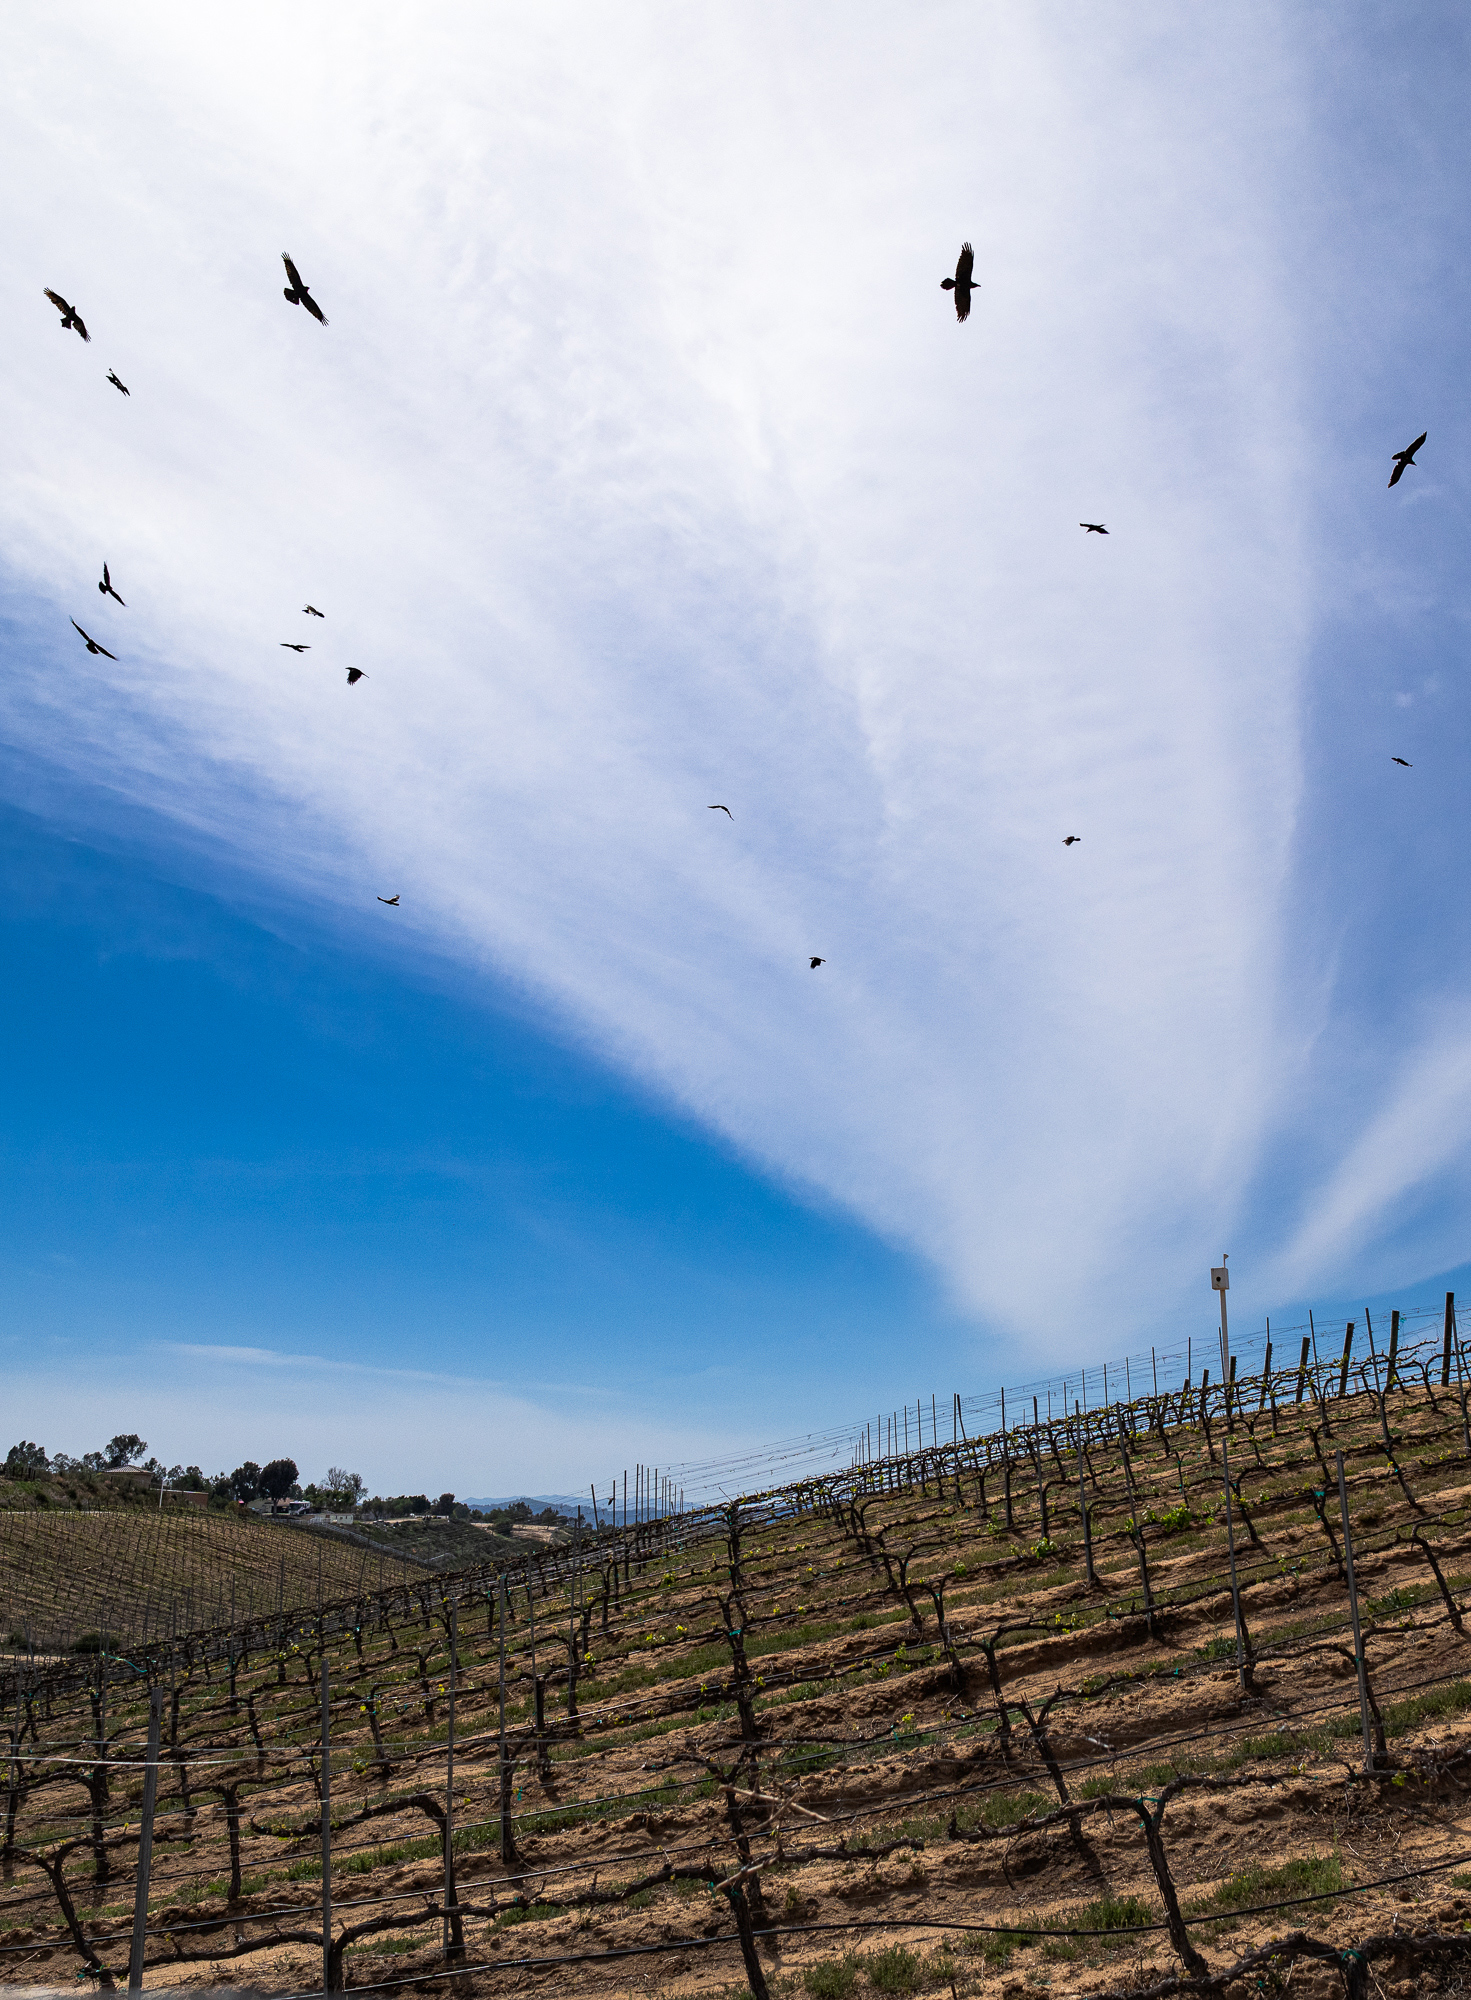 Ravens Circling a Dormant Vineyard in Temecula, CA